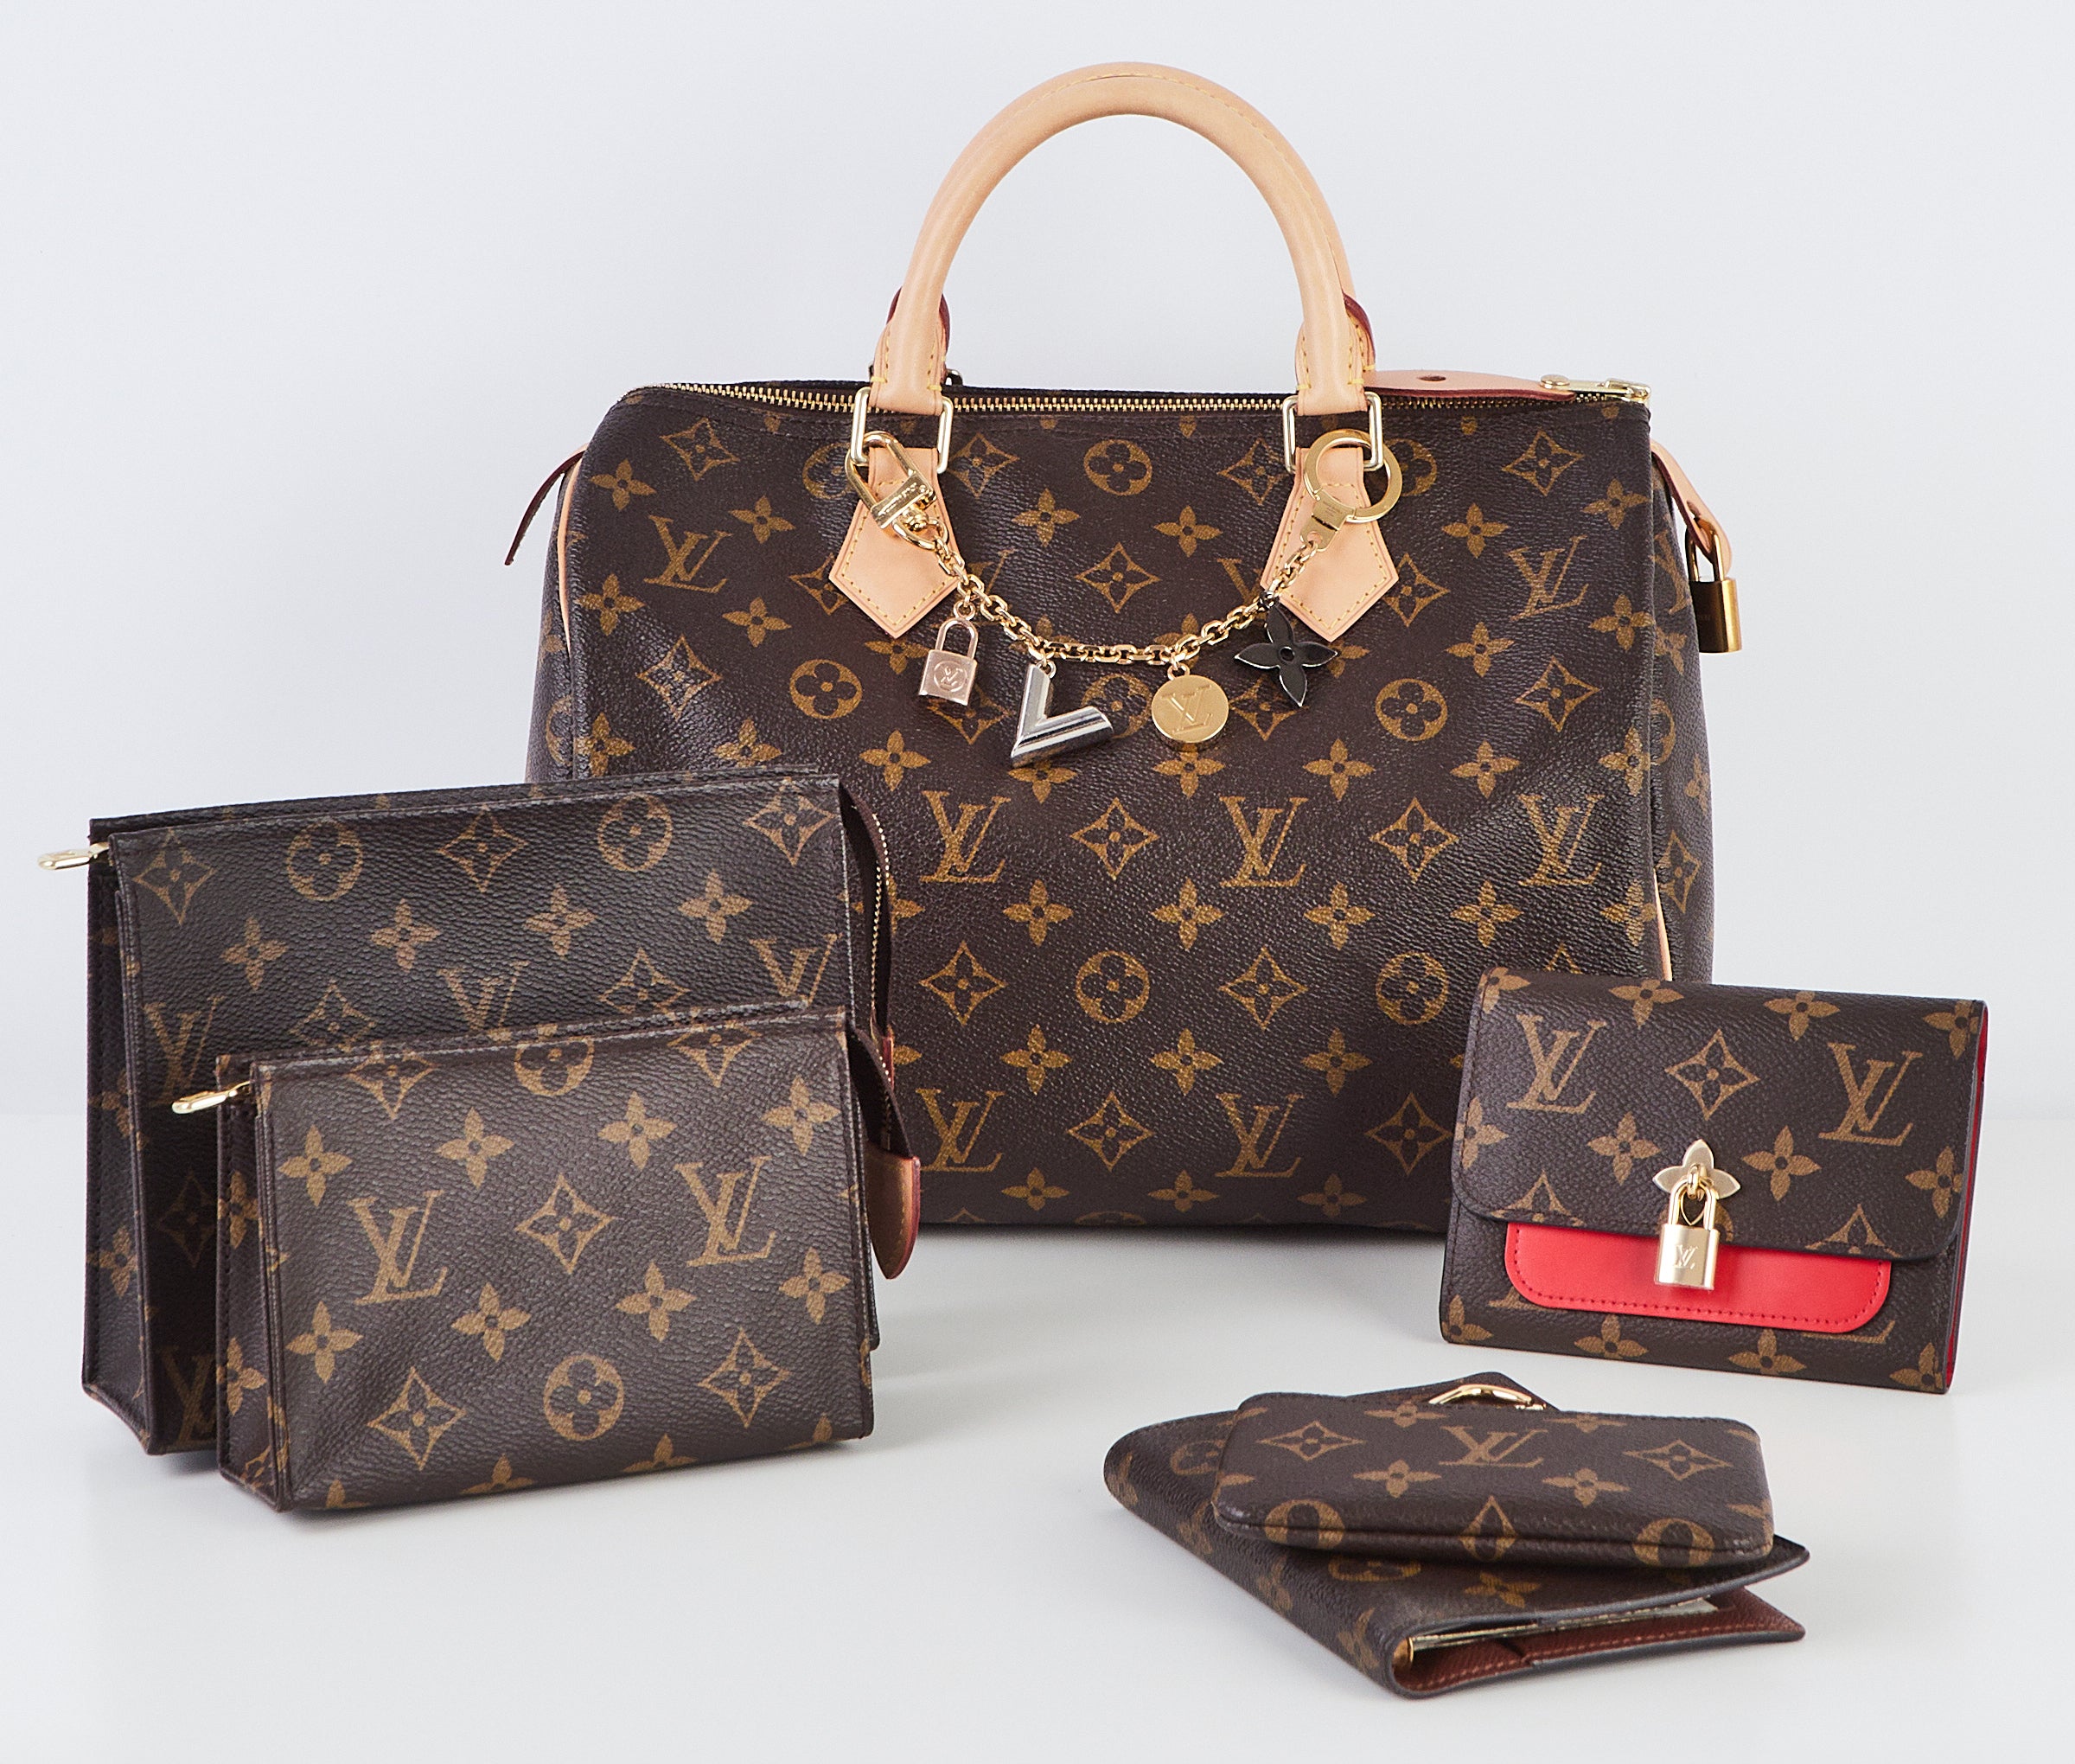 Louis Vuitton Speedy Bag Authenticity - 4 different fakes - Lollipuff